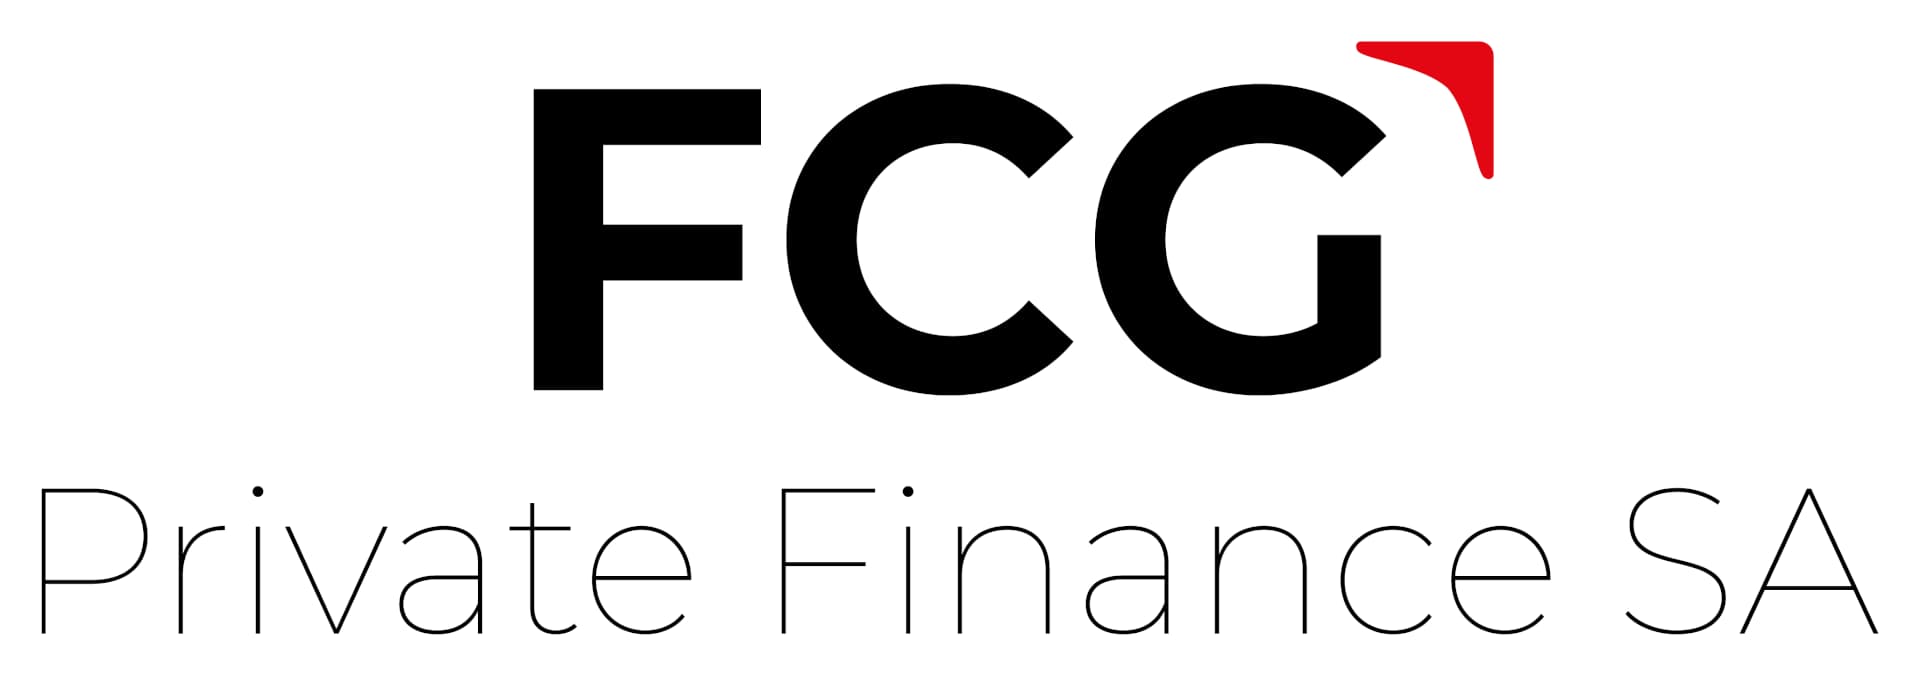 FCG Private Finance SA